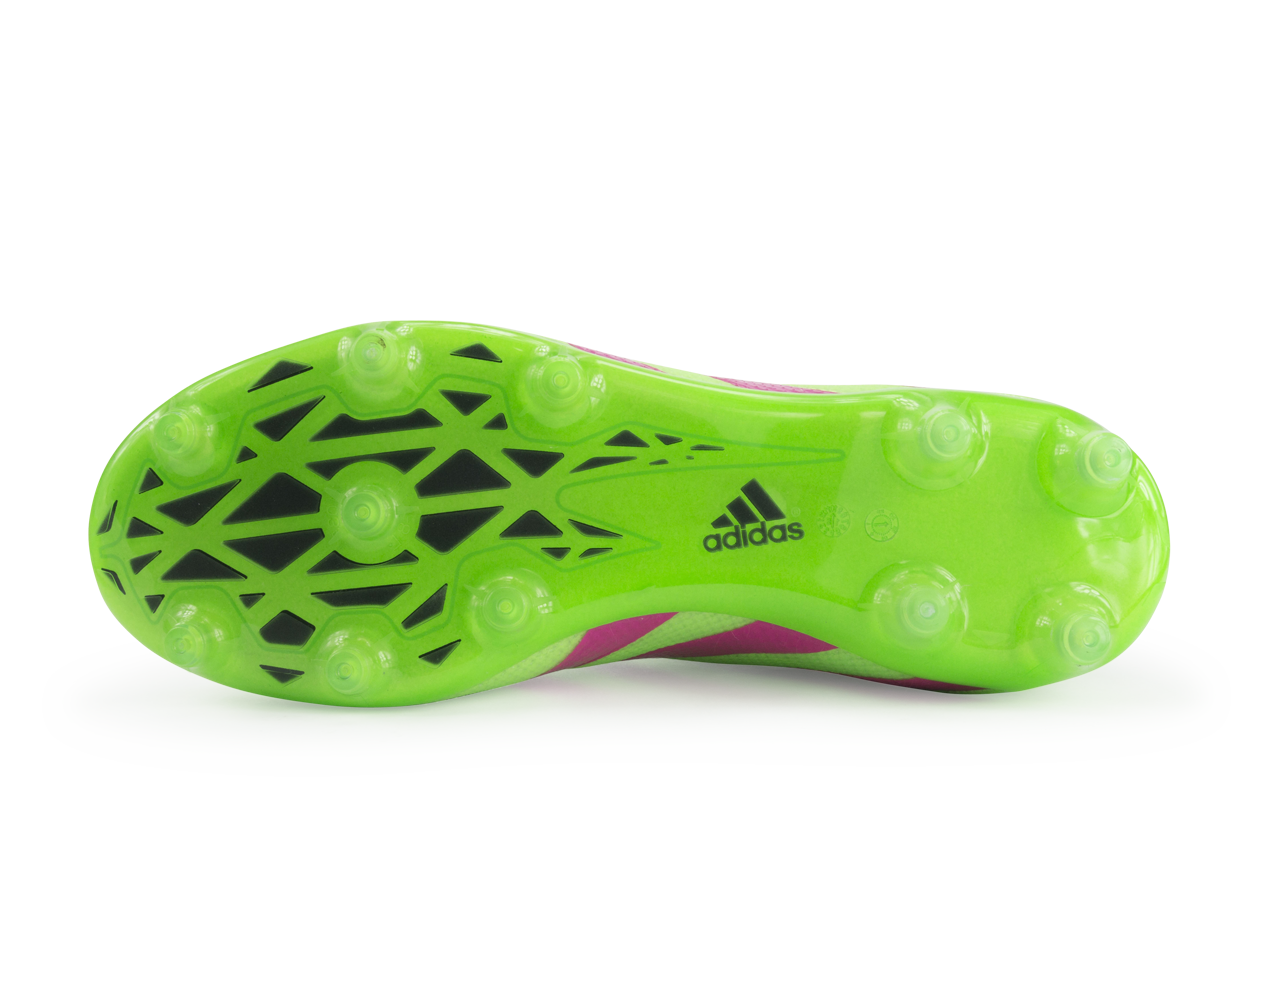 adidas Men's ACE 16.2 Primemesh FG/AG Solar Green/Shock Pink/Black